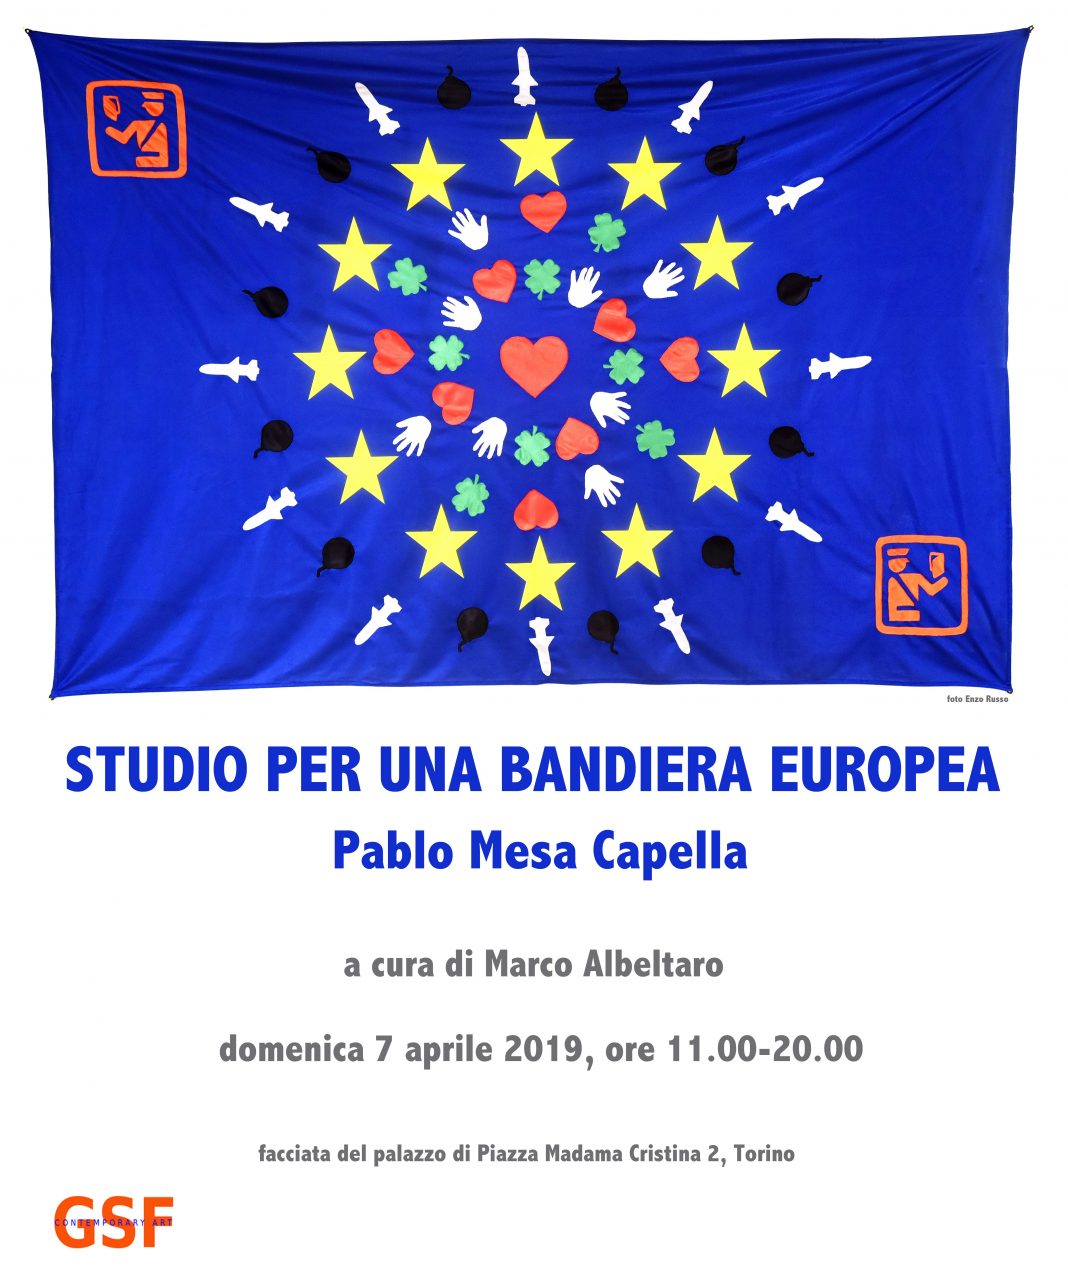 Pablo Mesa Capella – Studio per una bandiera europeahttps://www.exibart.com/repository/media/eventi/2019/04/pablo-mesa-capella-8211-studio-per-una-bandiera-europea-1068x1277.jpg